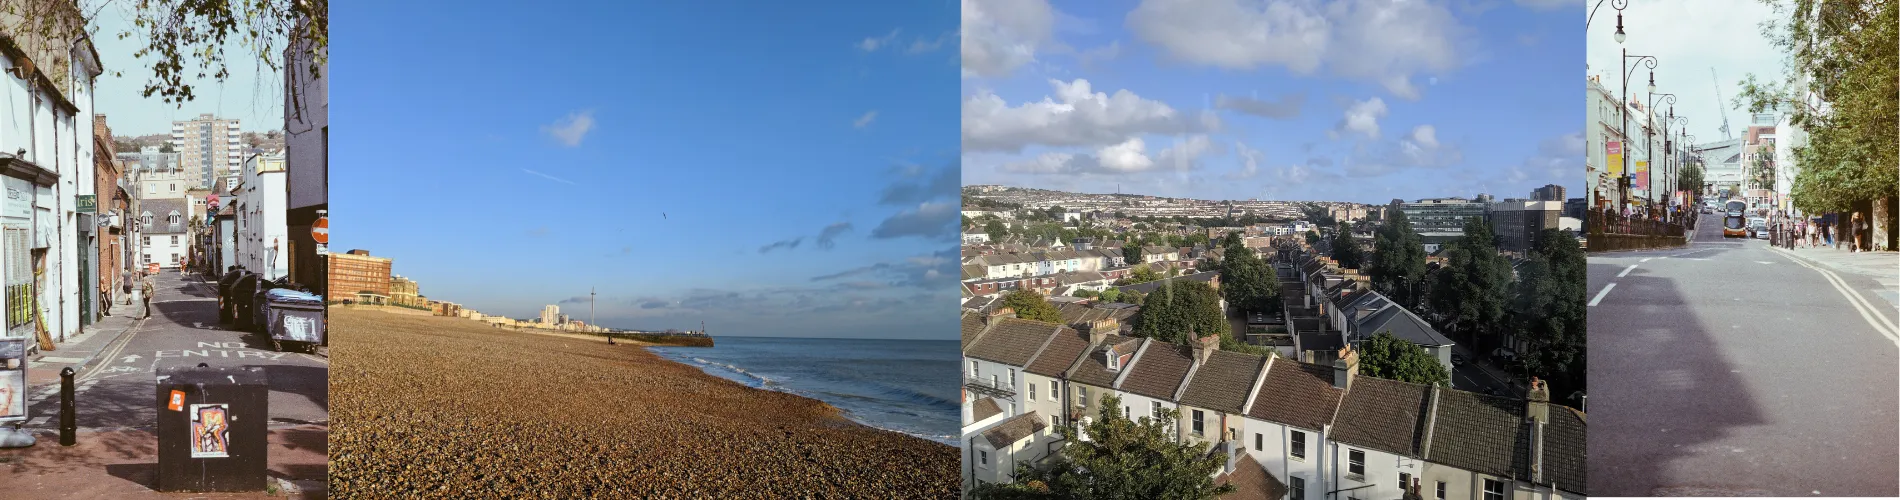 Collage of Brighton images.